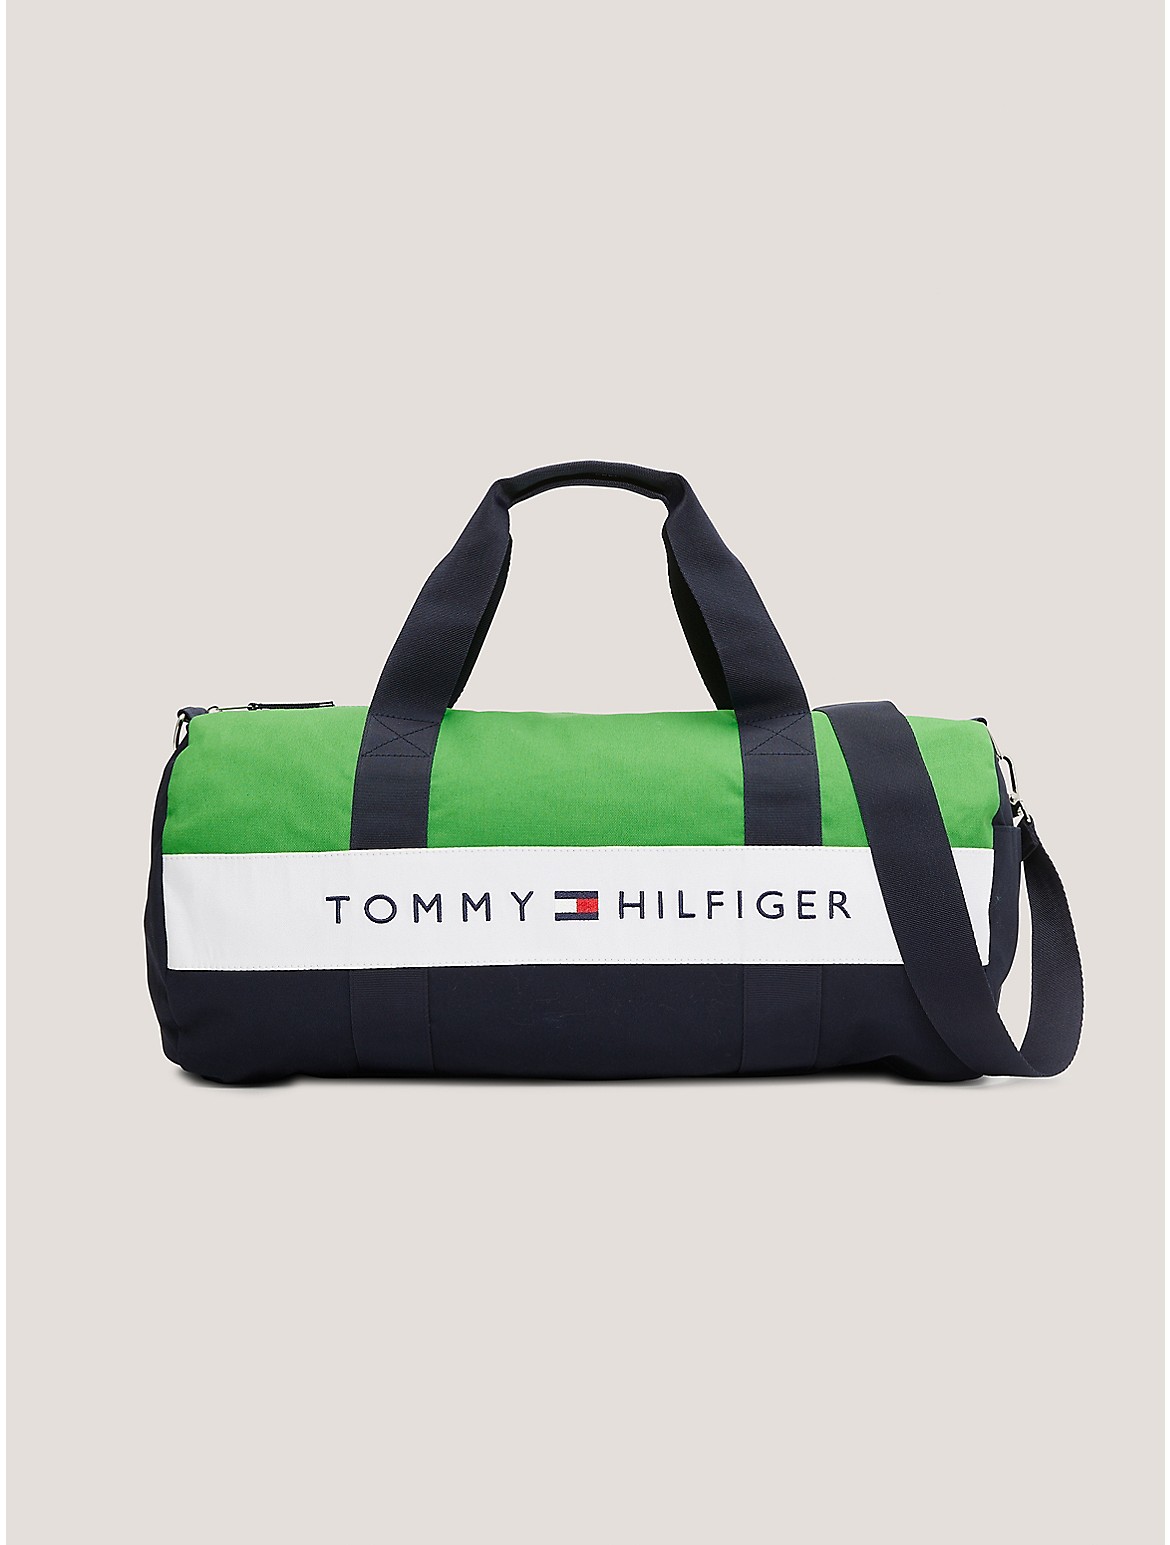 Tommy Hilfiger Men's Colorblock Logo Duffle Bag